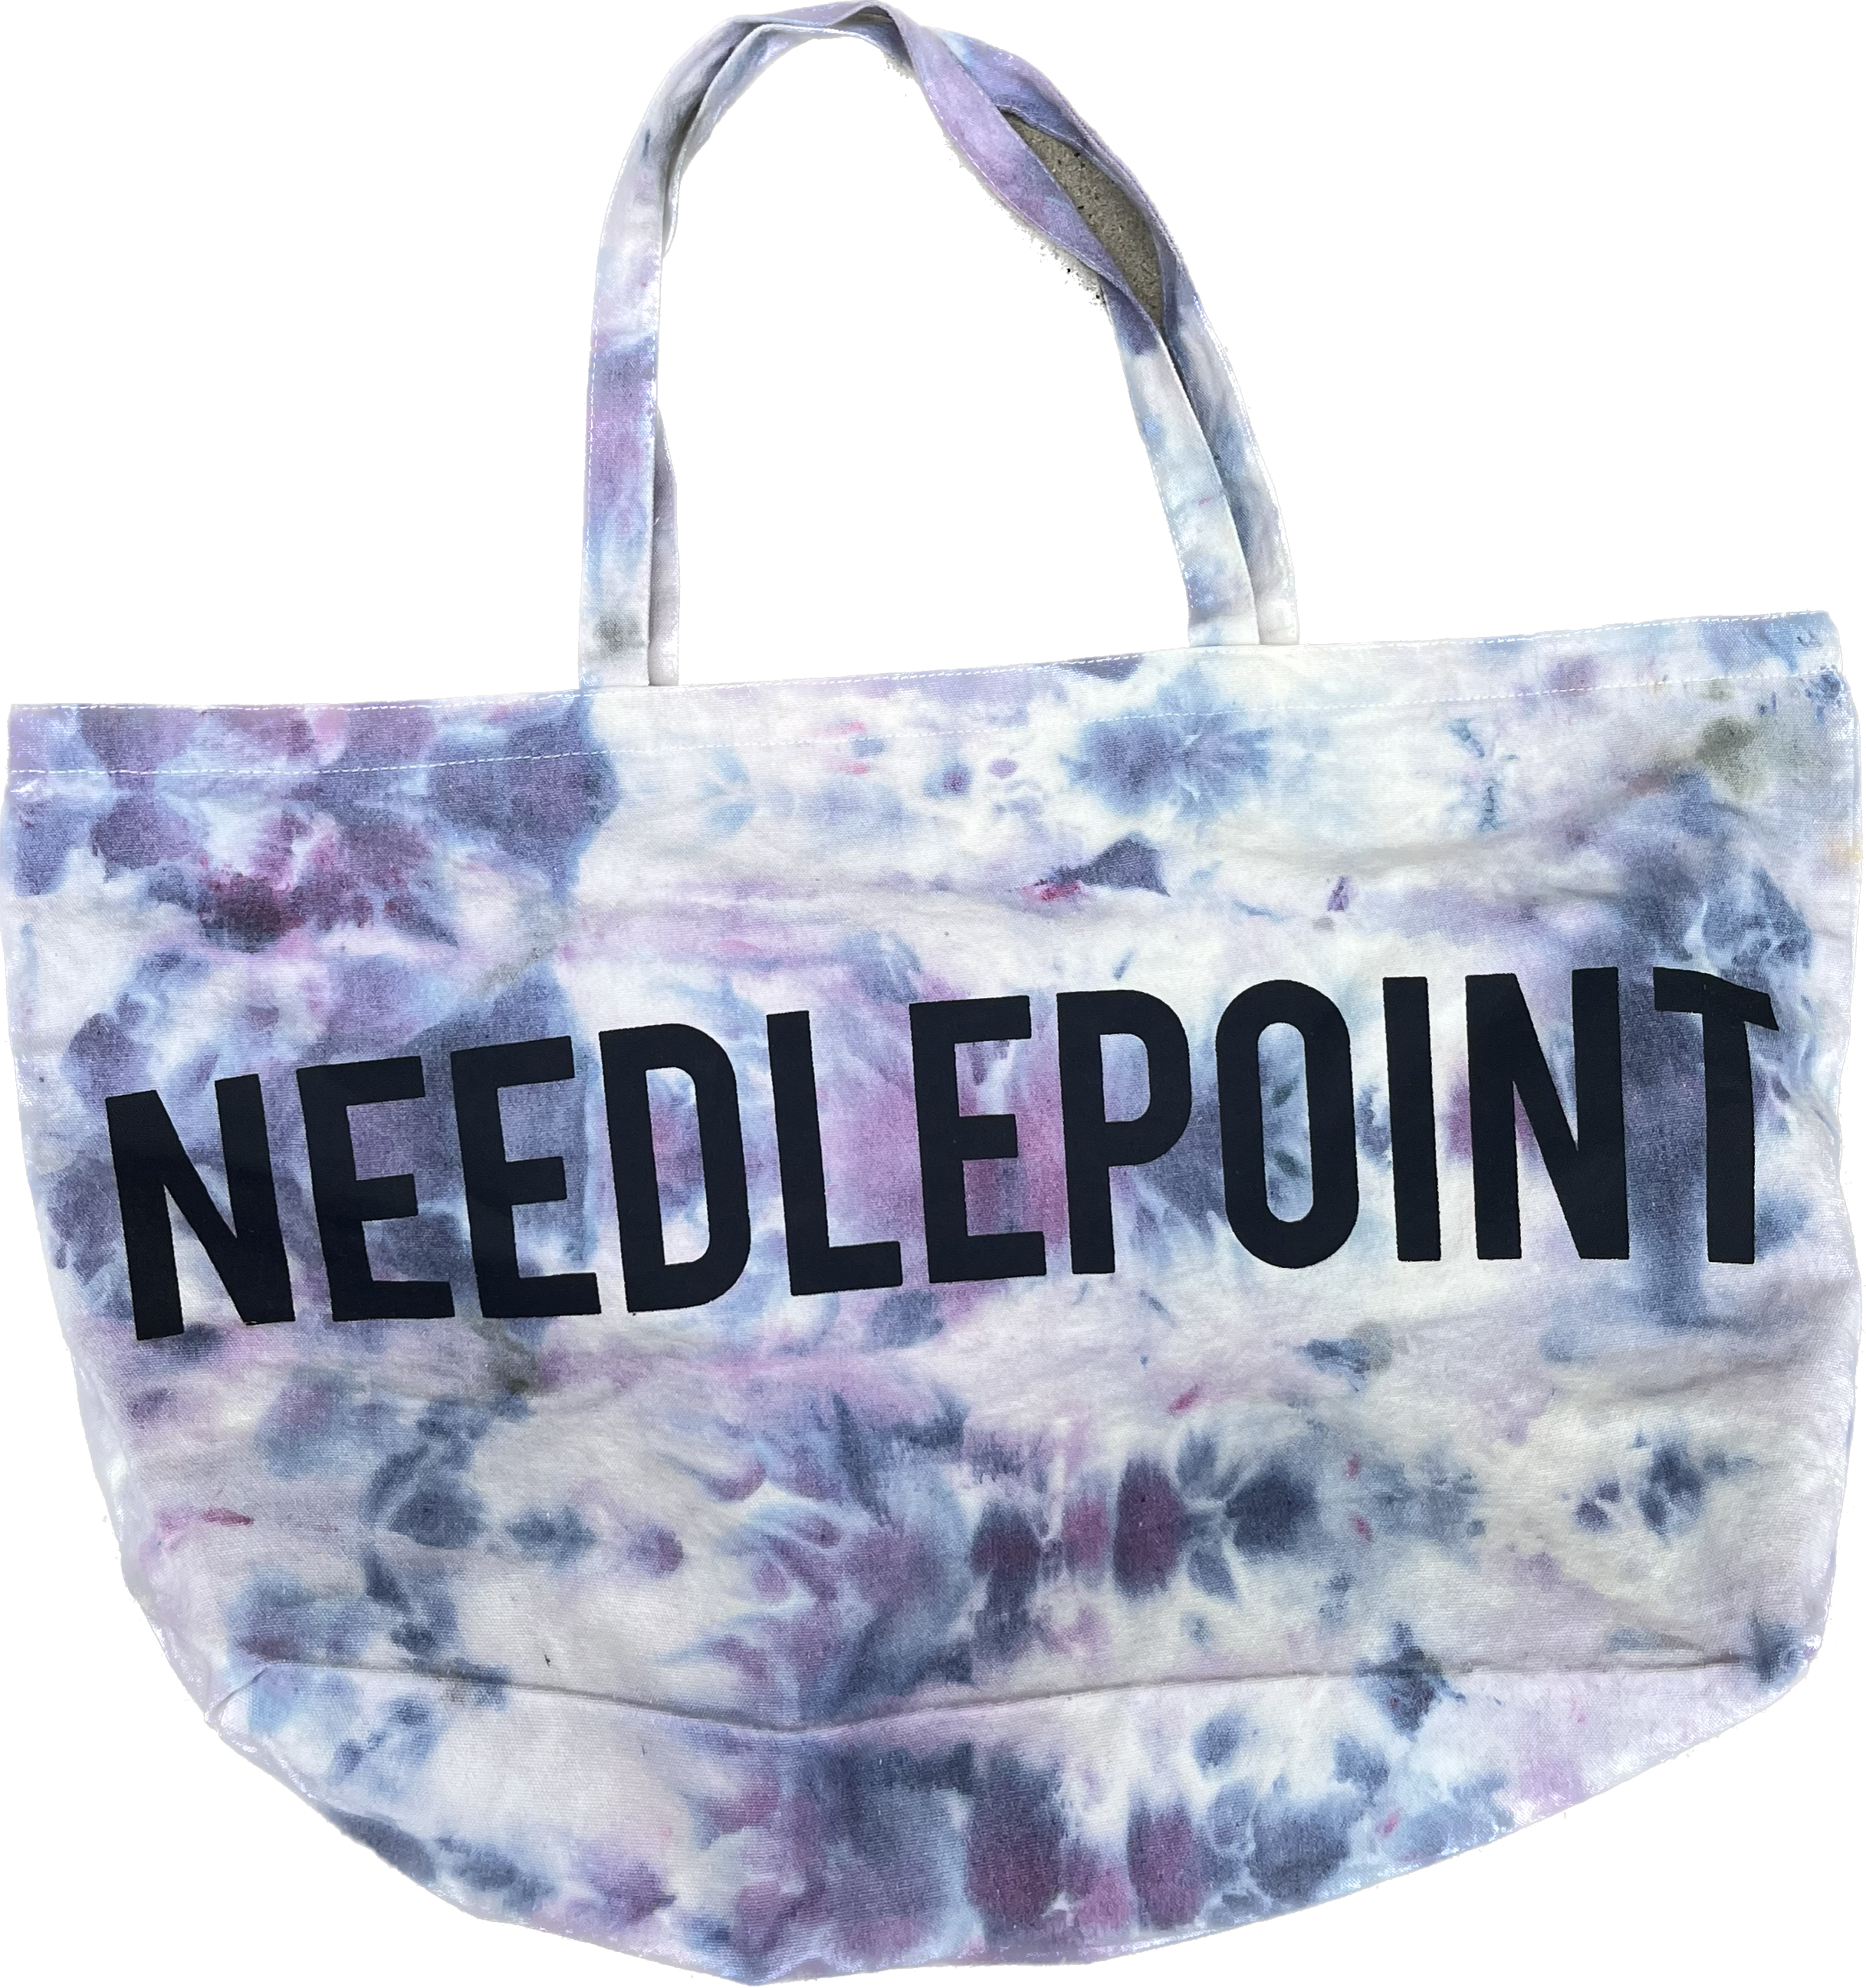 Hand Dyed Needlepoint Bag